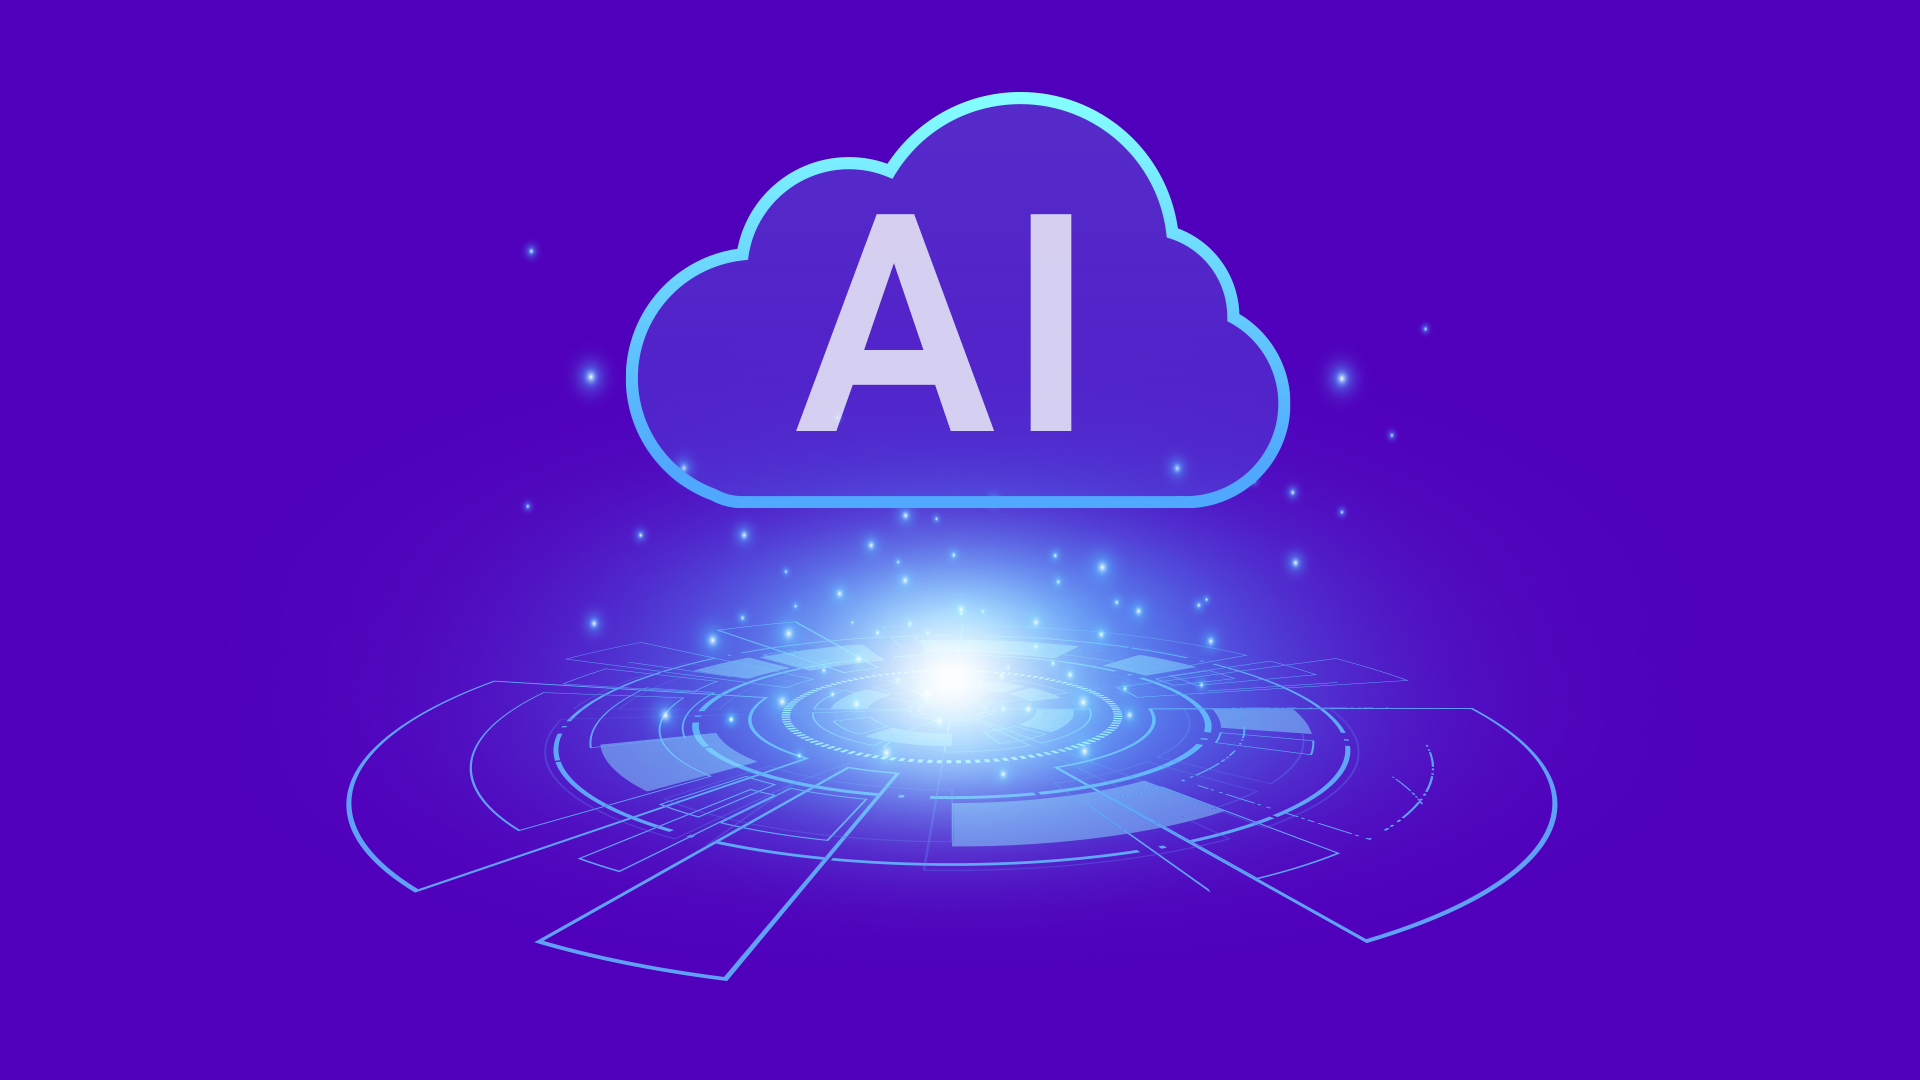 Conceptual image of AI into the cloud